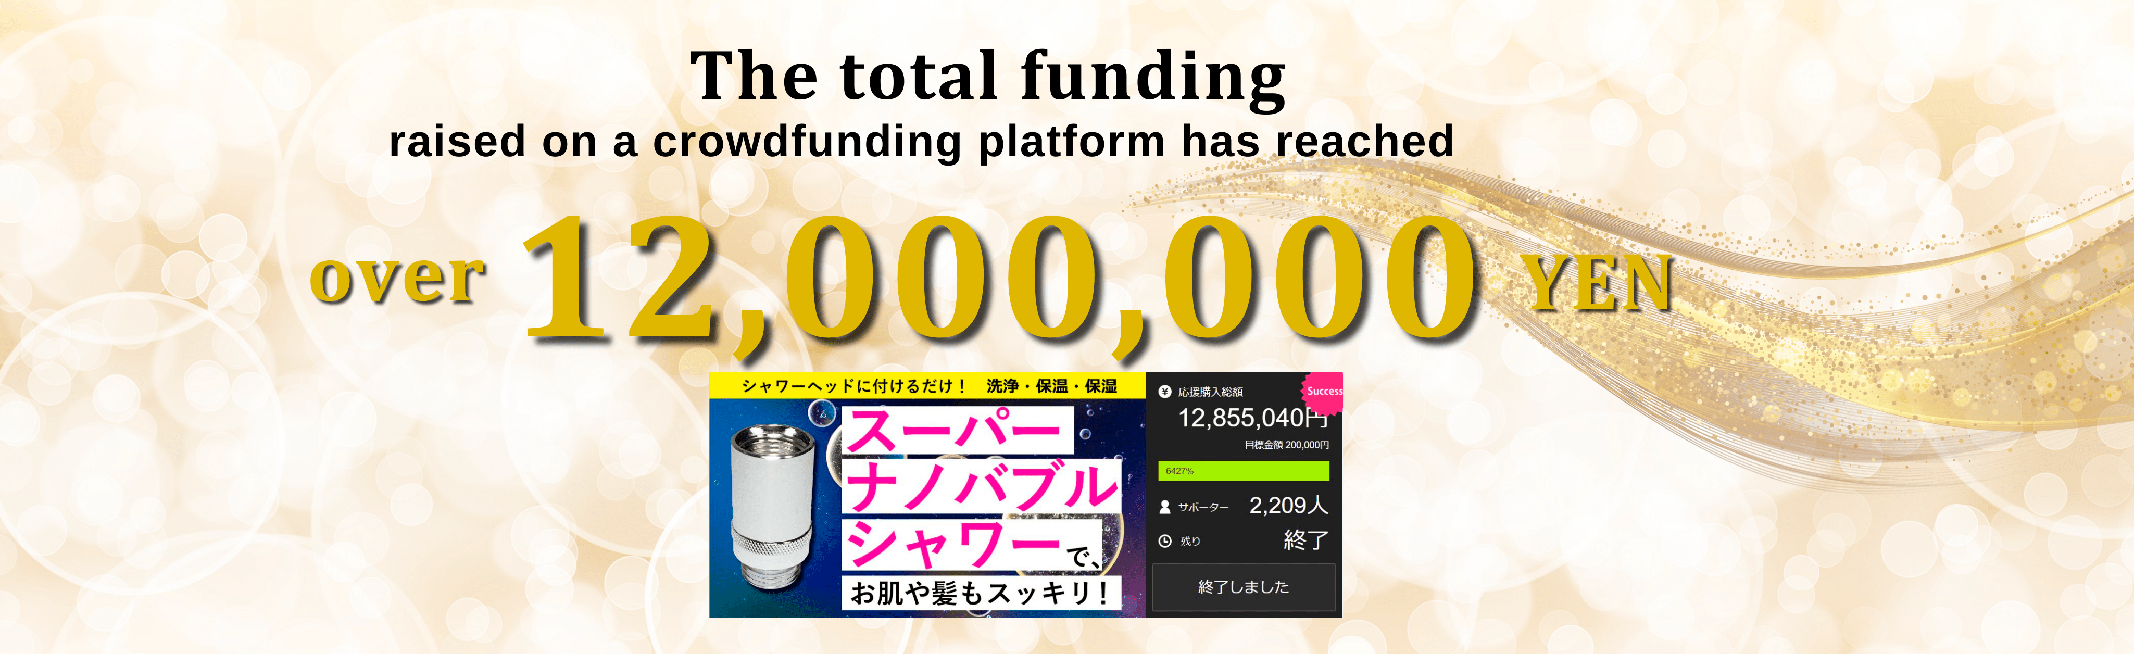 Raised over twelve million yen on a crowdfunding platform.